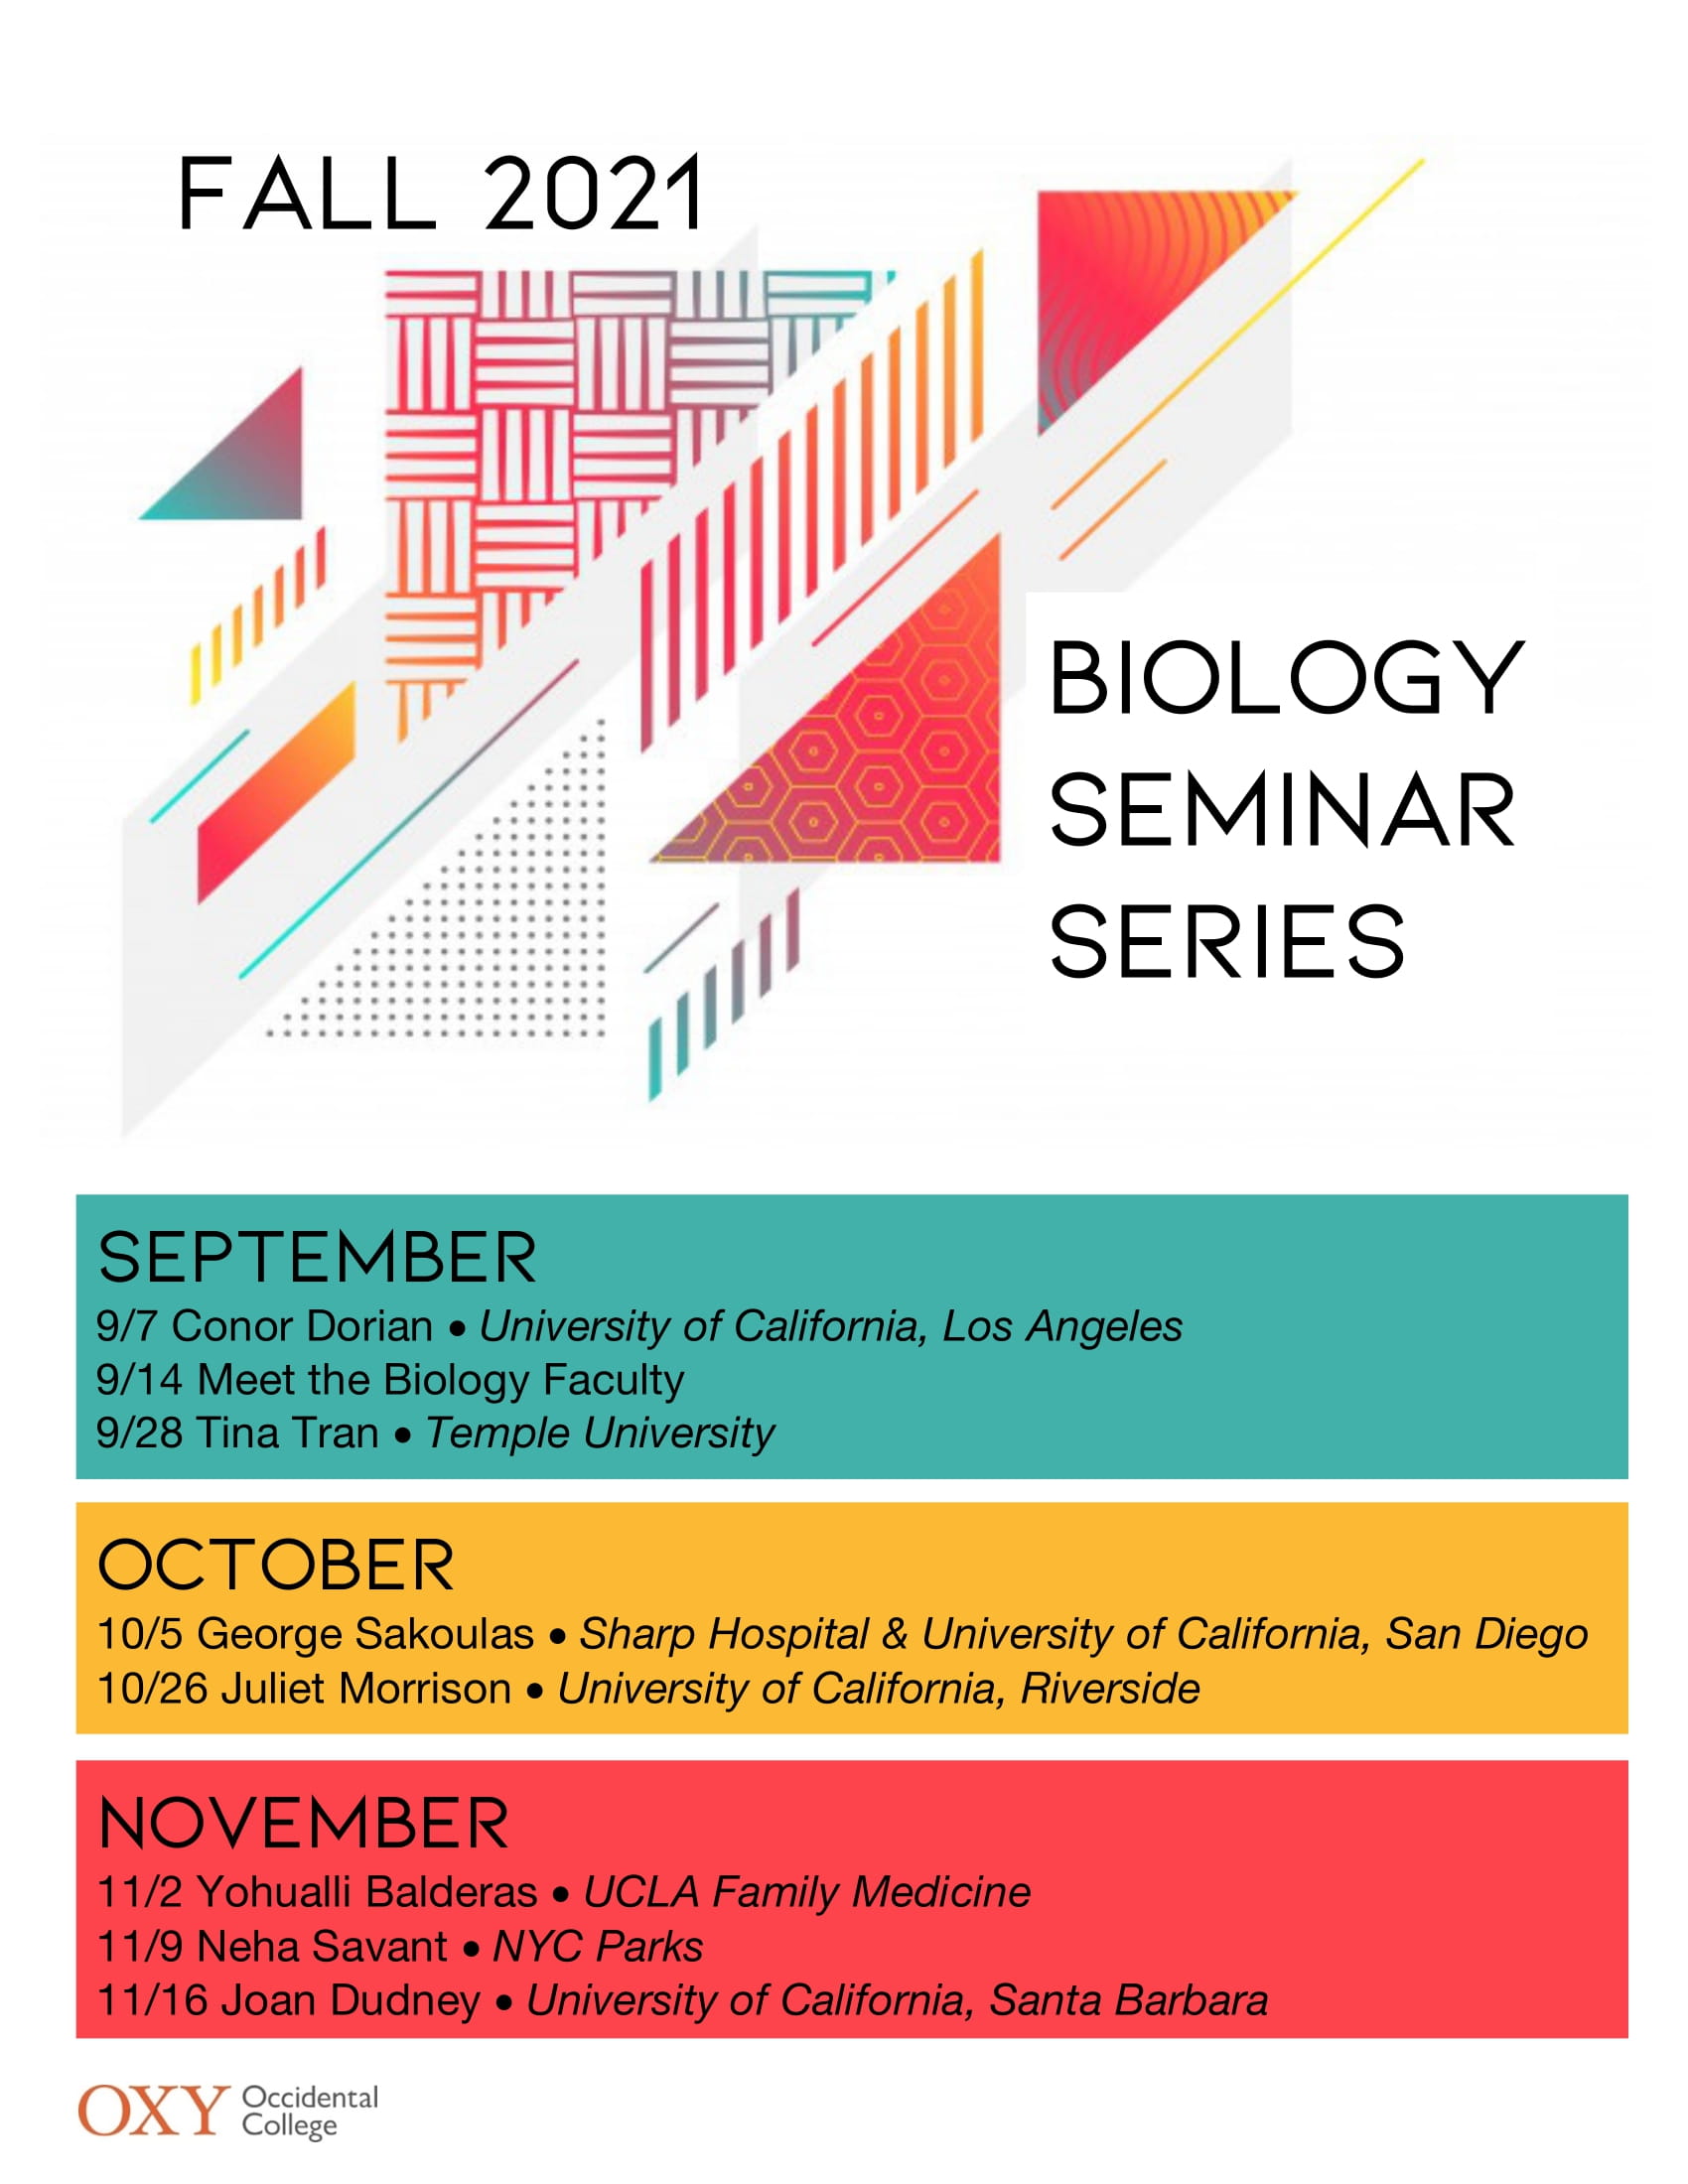 Fall 2021 Biology Seminar Series Schedule